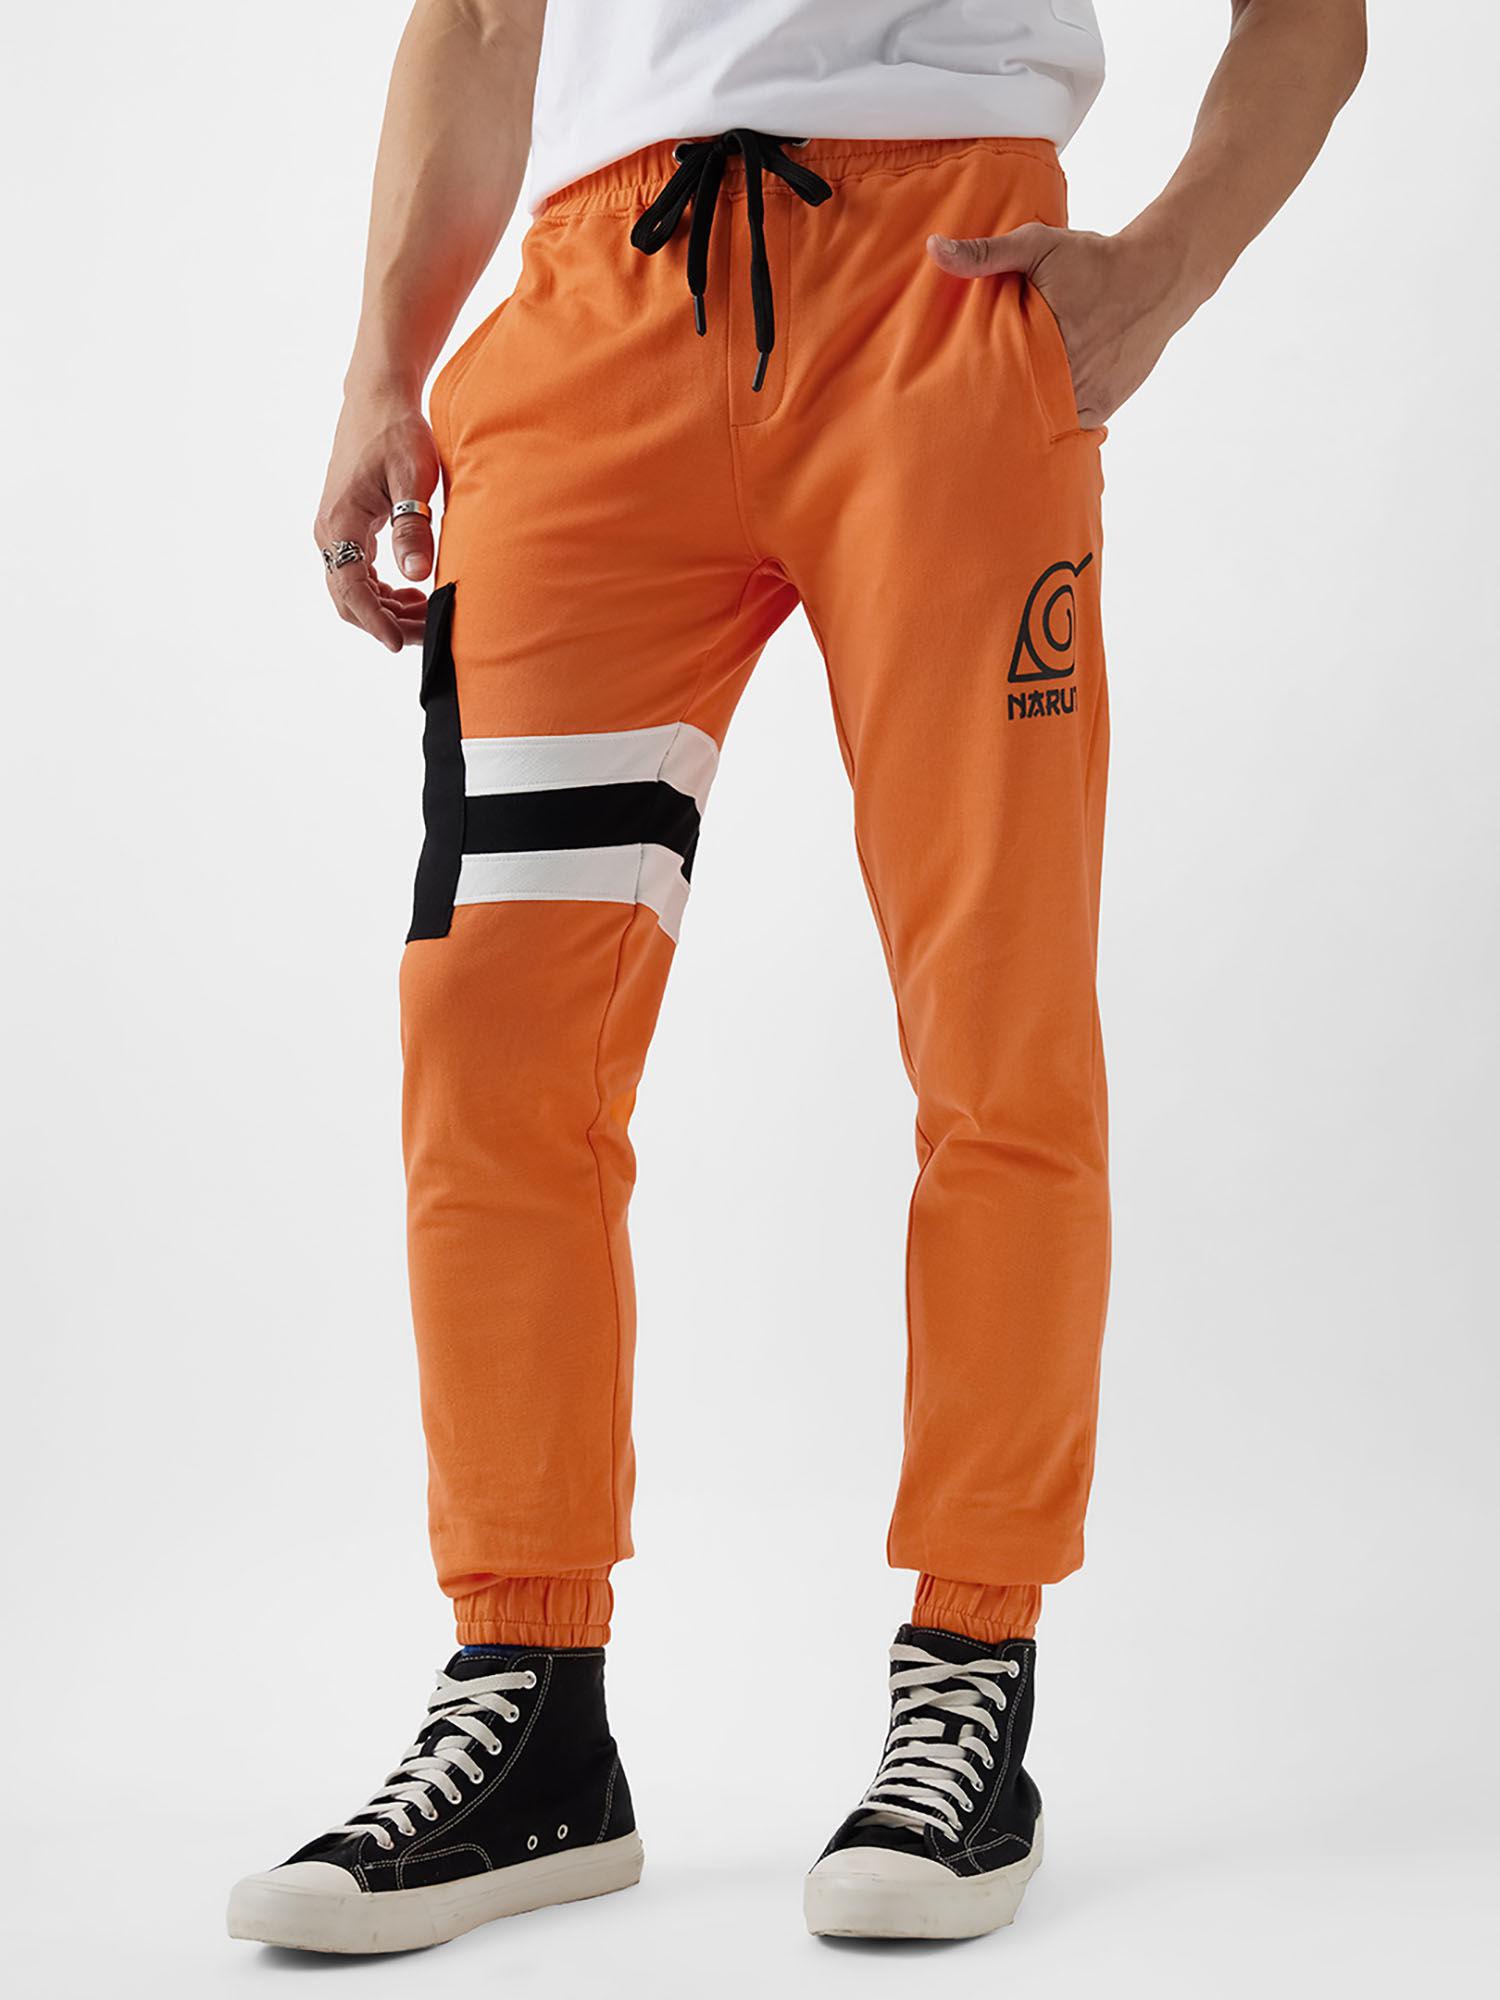 official naruto: uzumaki orange men cargo joggers